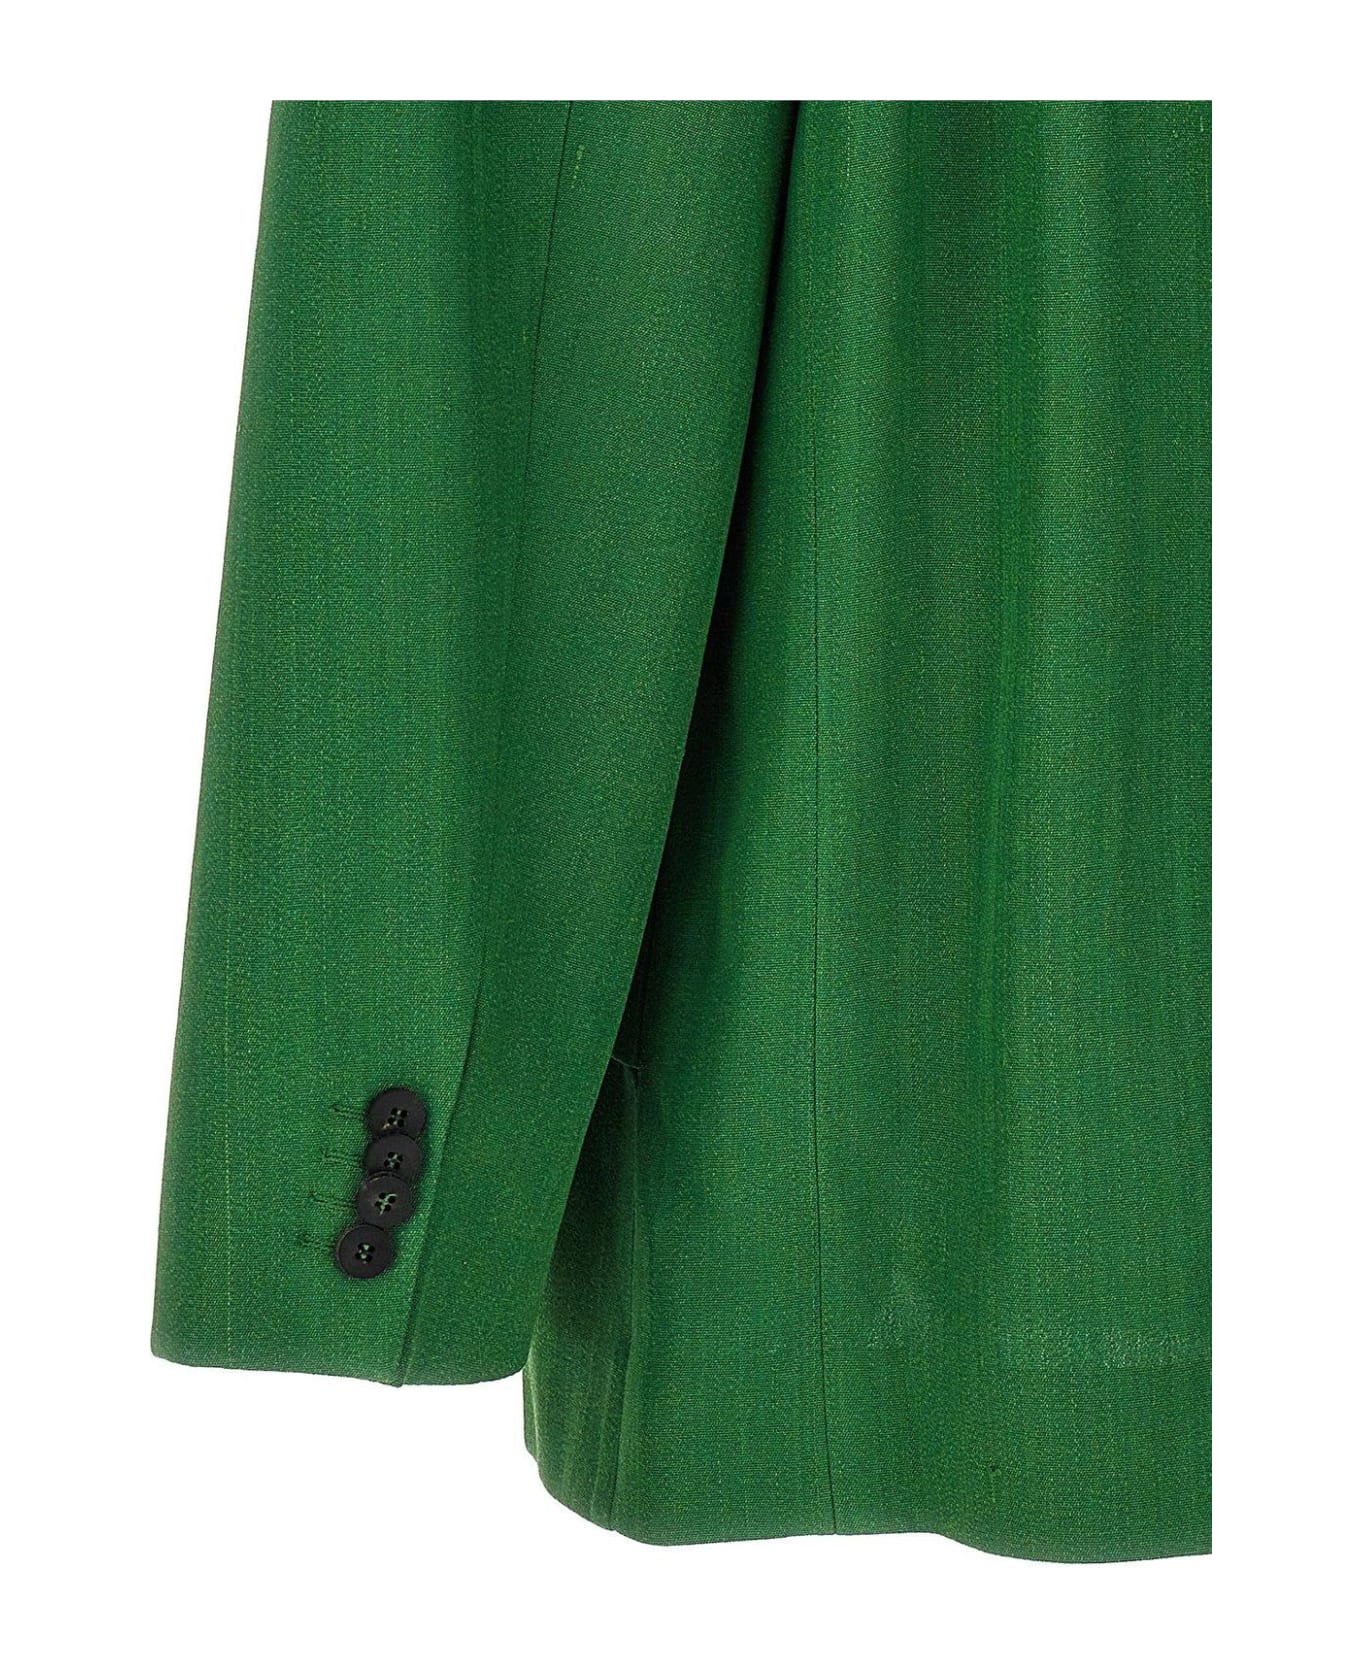 Jacquemus Oversized Button-up Blazer - Dark green ブレザー